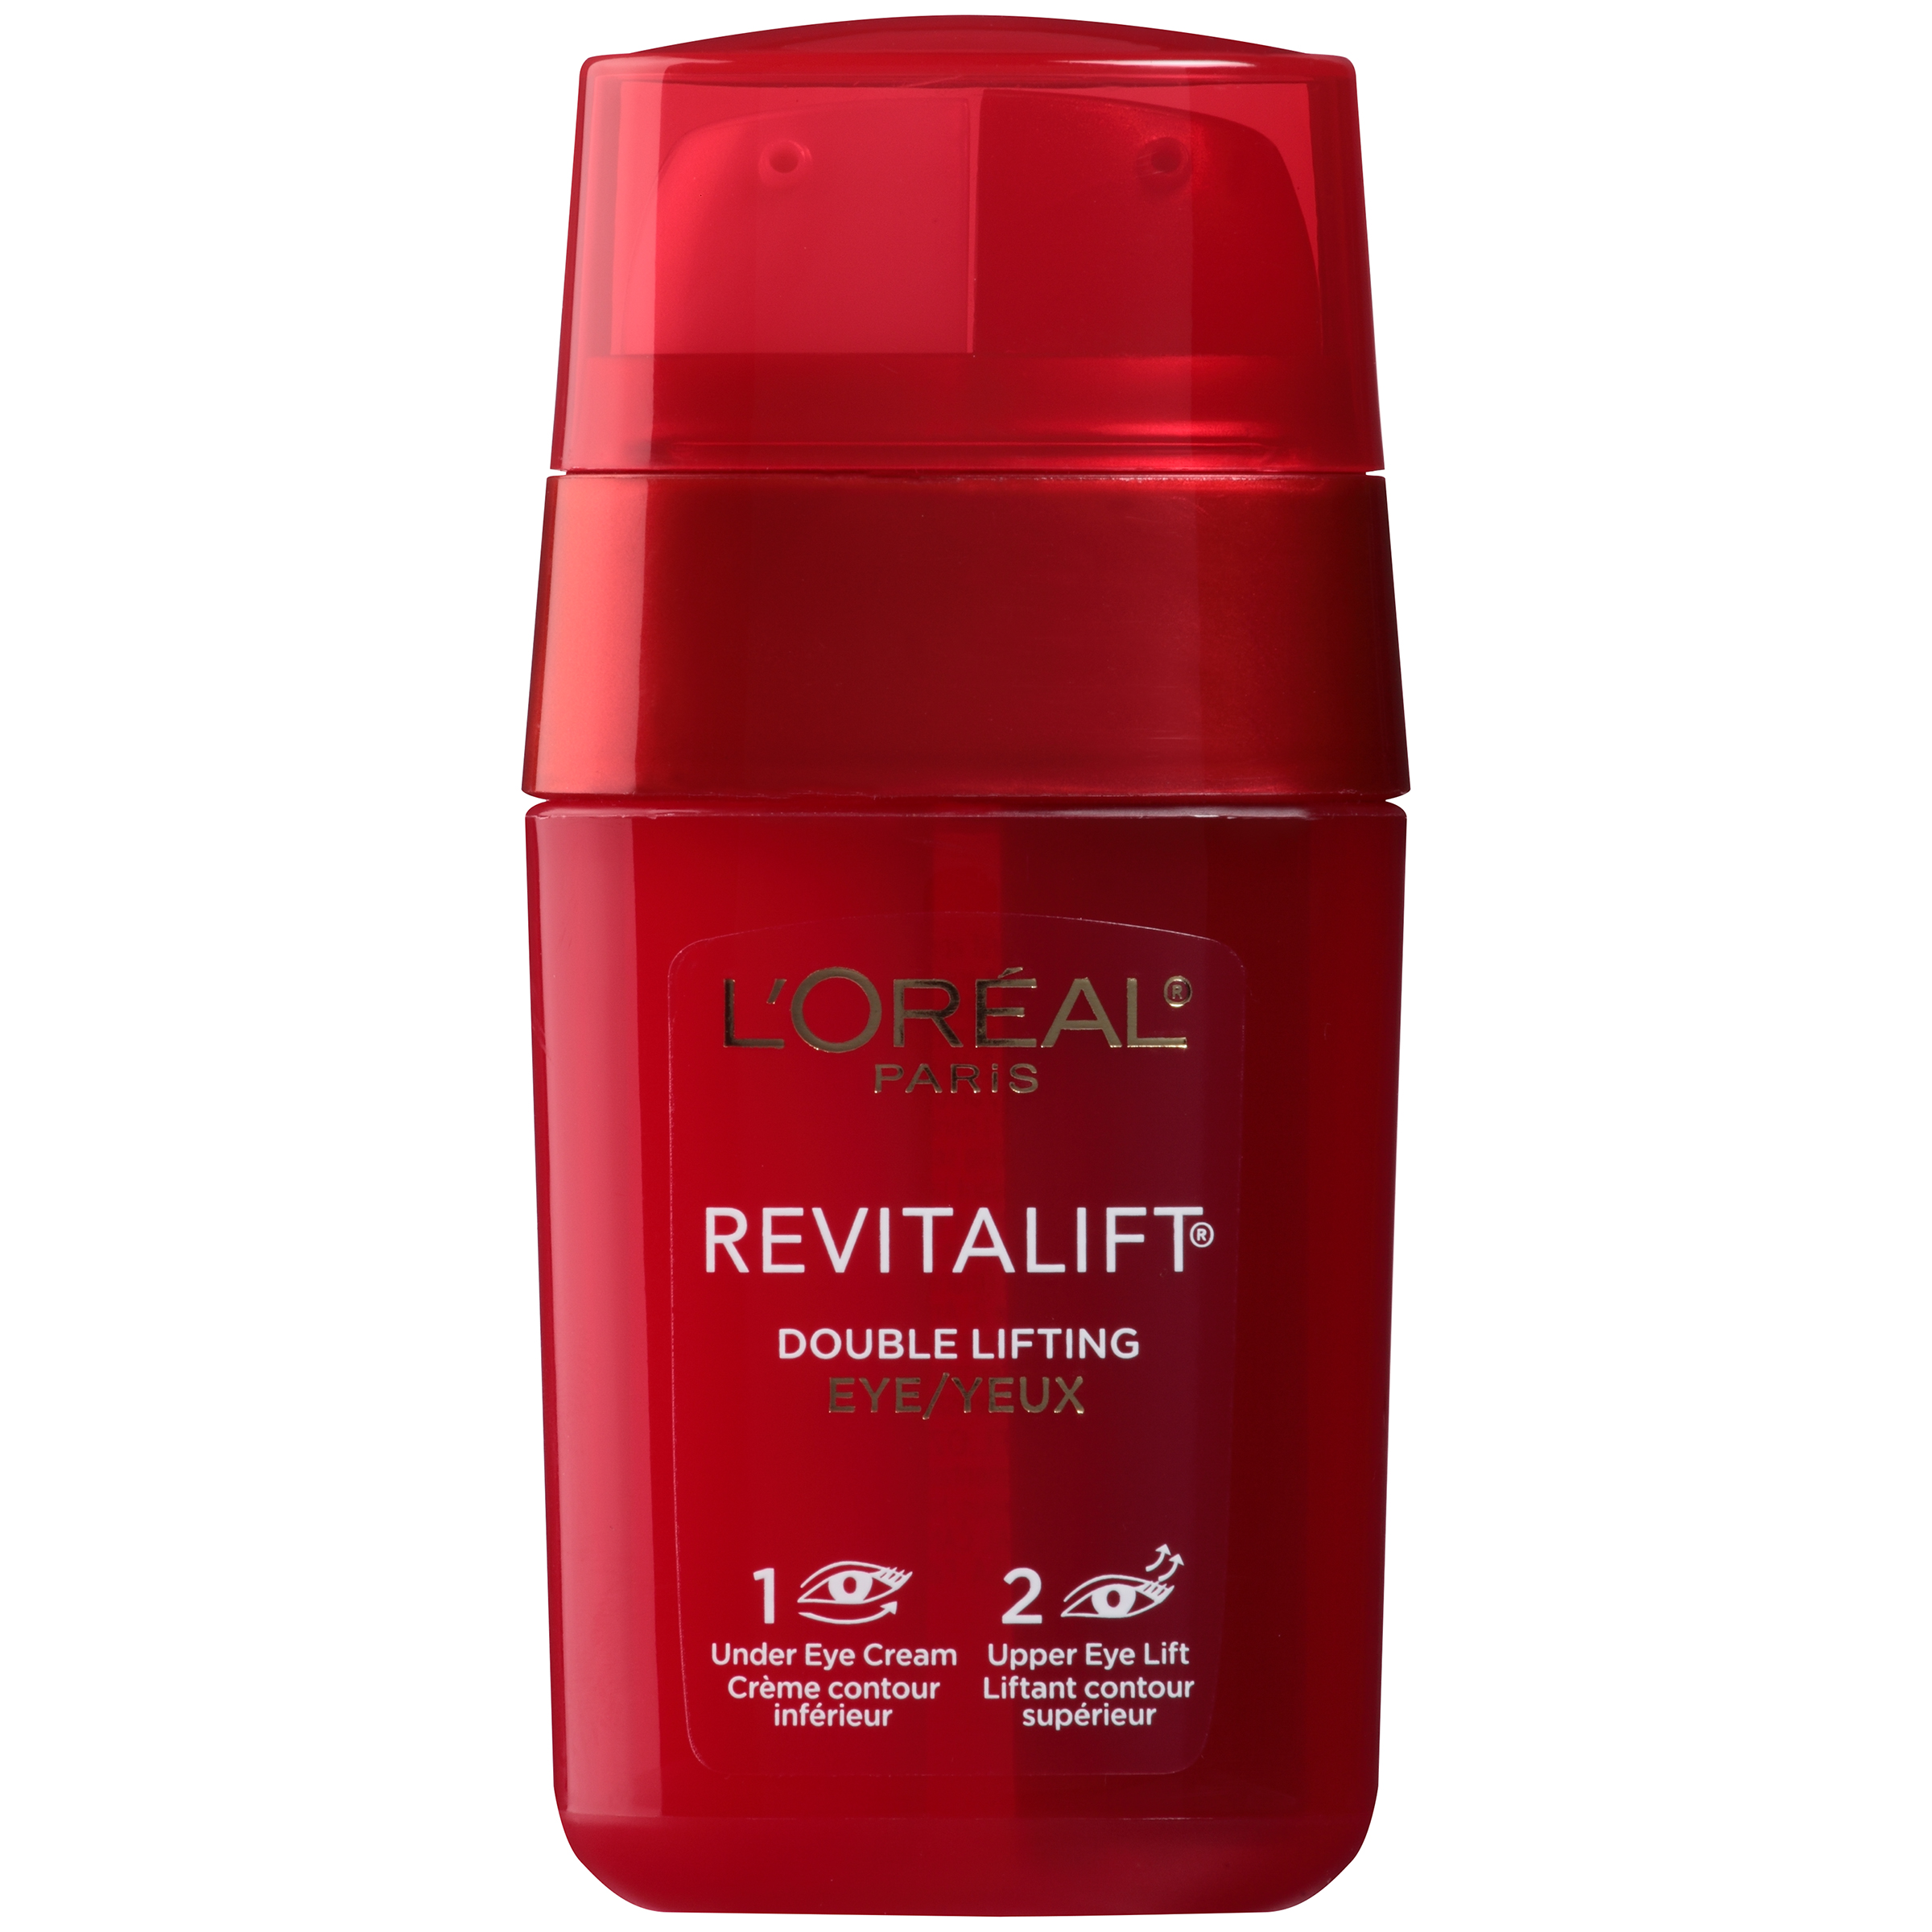 L'Oreal RevitaLift Eye Treatment, Double Lifting, 0.5 fl oz (15 ml)